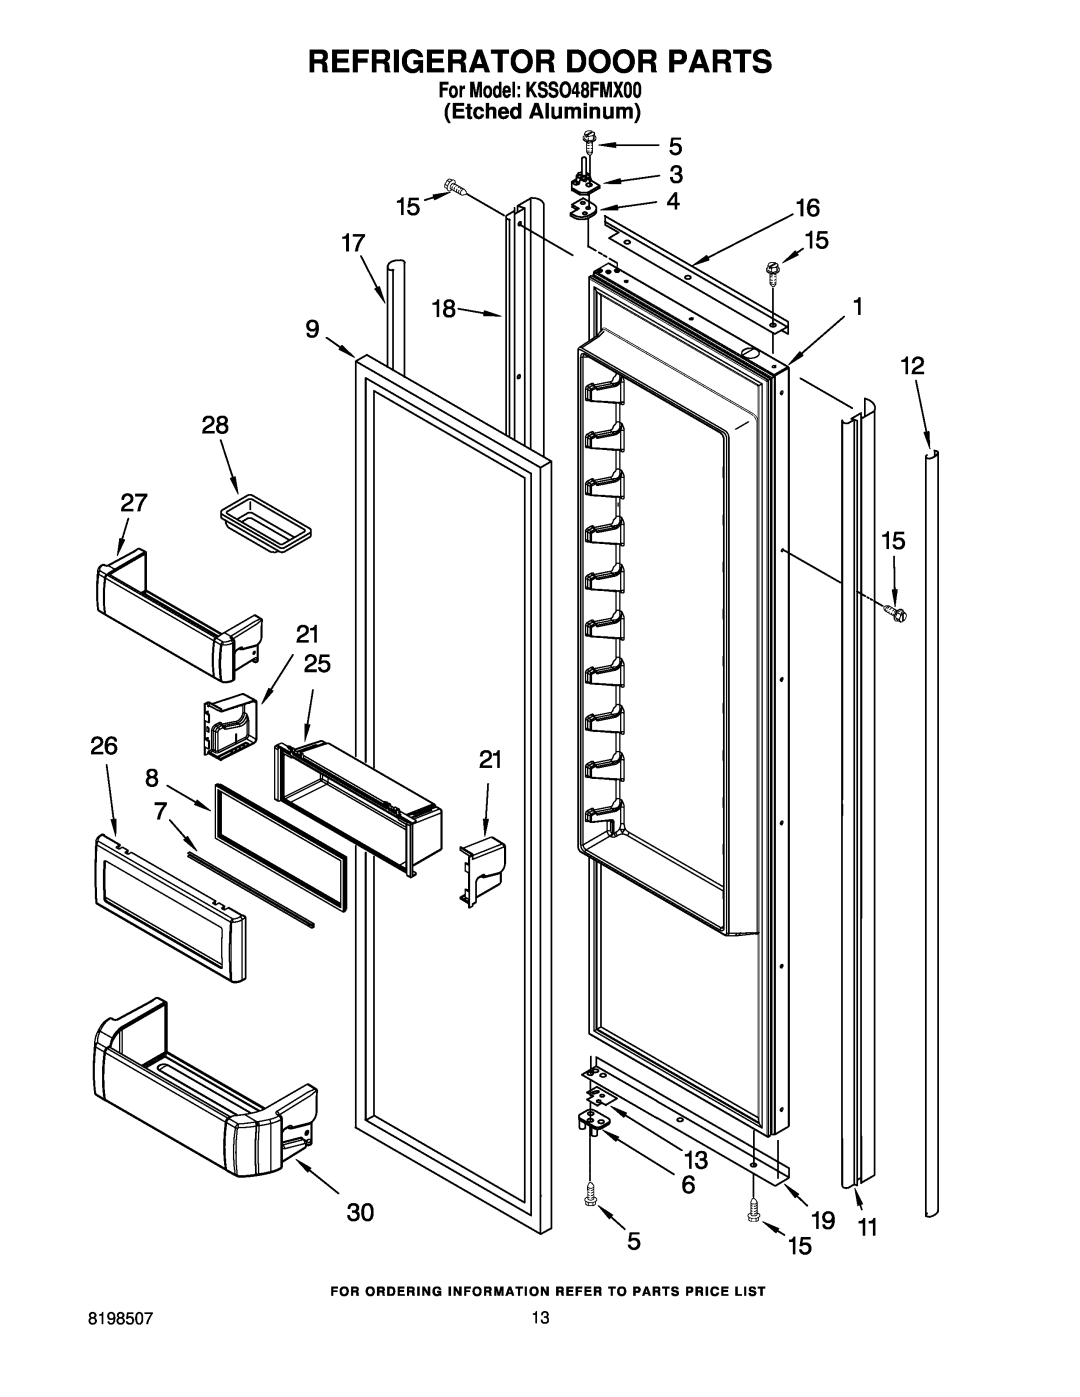 KitchenAid manual Refrigerator Door Parts, For Model KSSO48FMX00 Etched Aluminum 